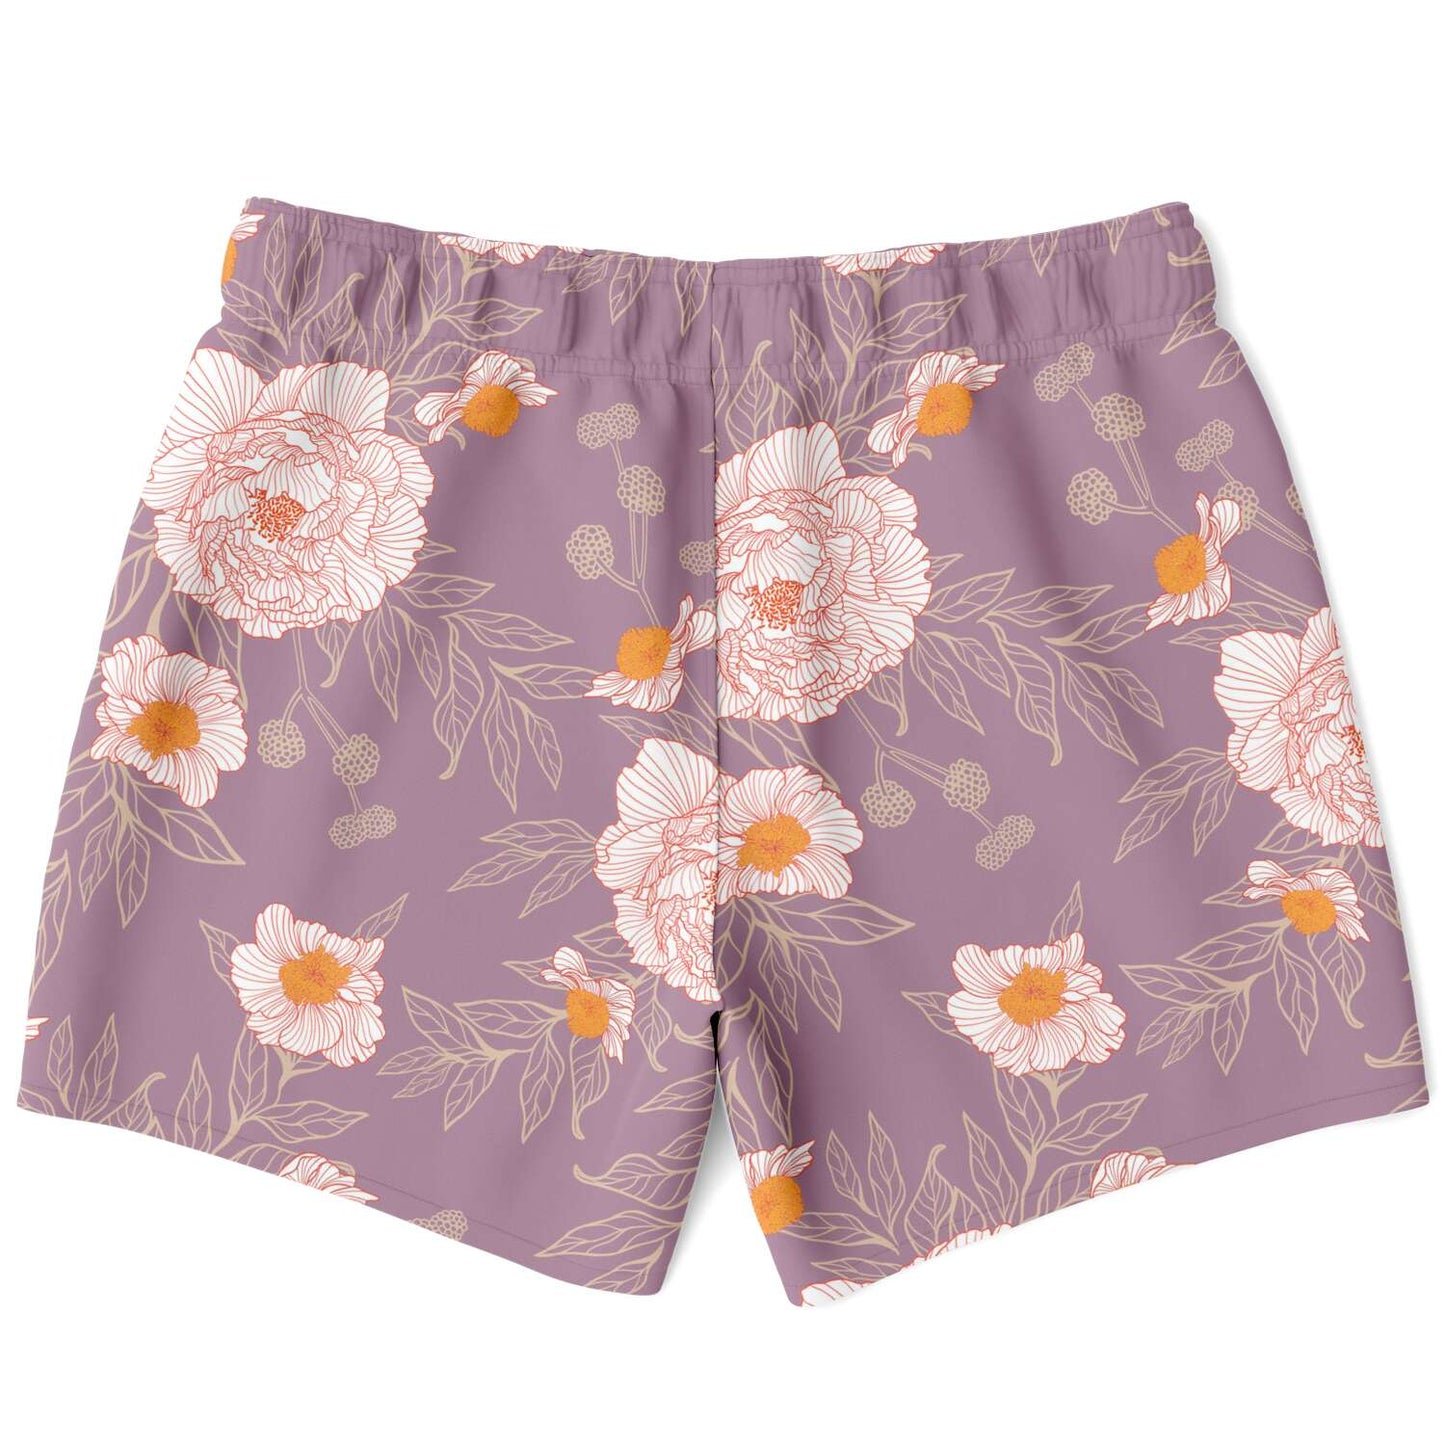 Load image into Gallery viewer, Orange Peonies Floral Rose Swim Shorts
